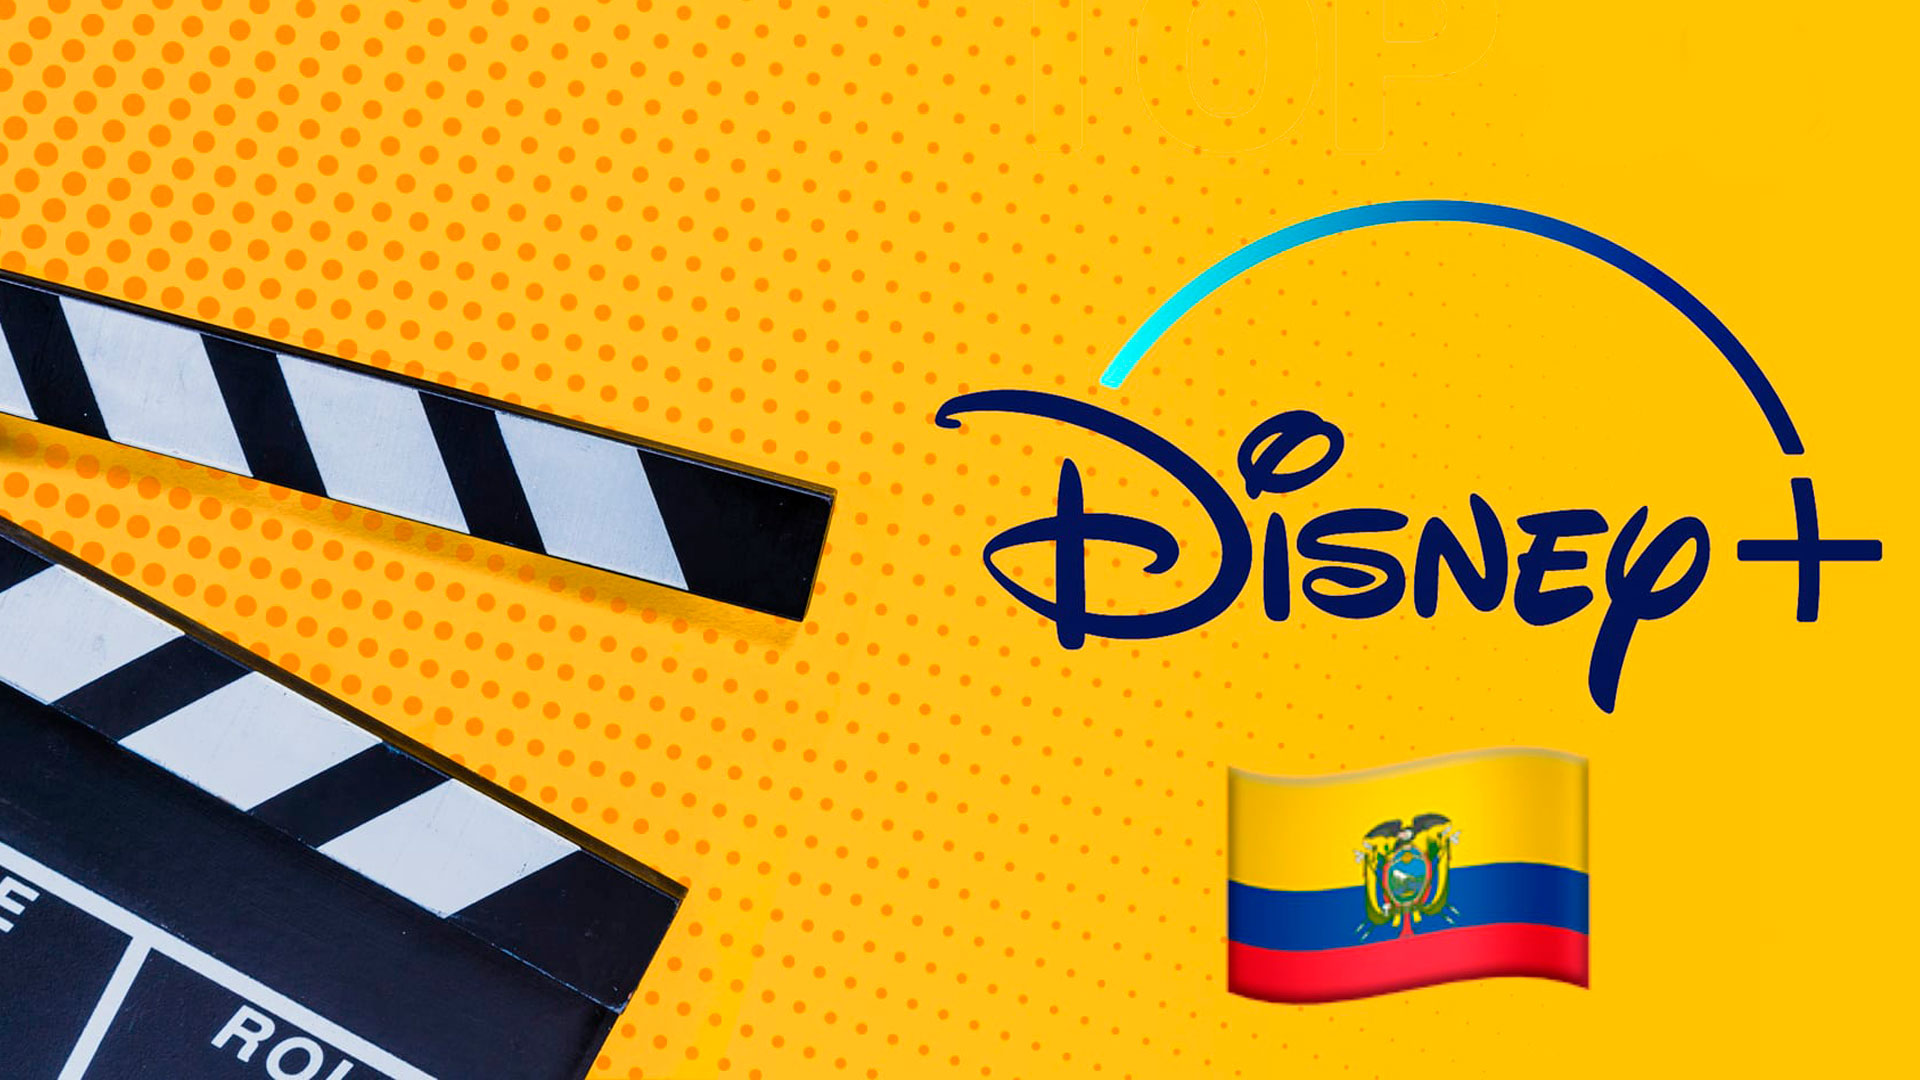 Las series que están de moda en Disney+ Ecuador este día